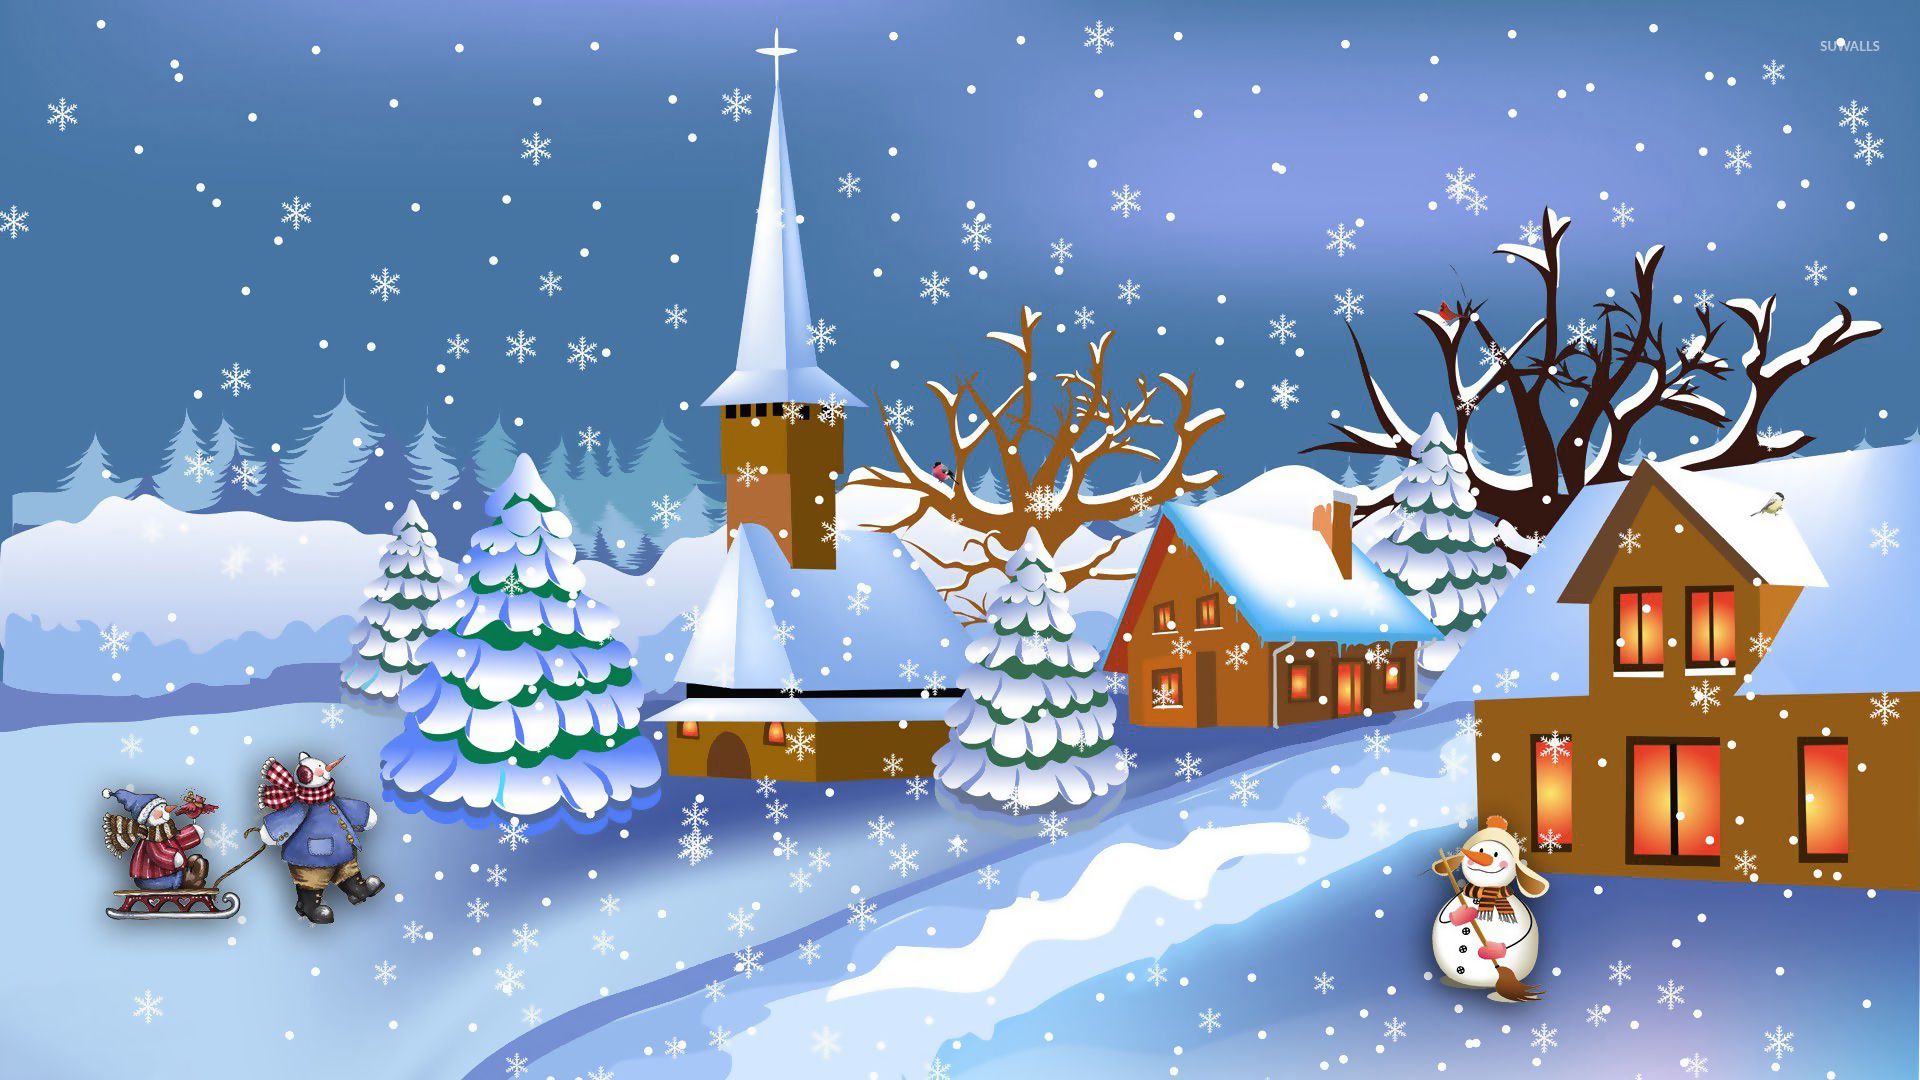 Splendid winter night in the snowman town wallpaper Art wallpaper